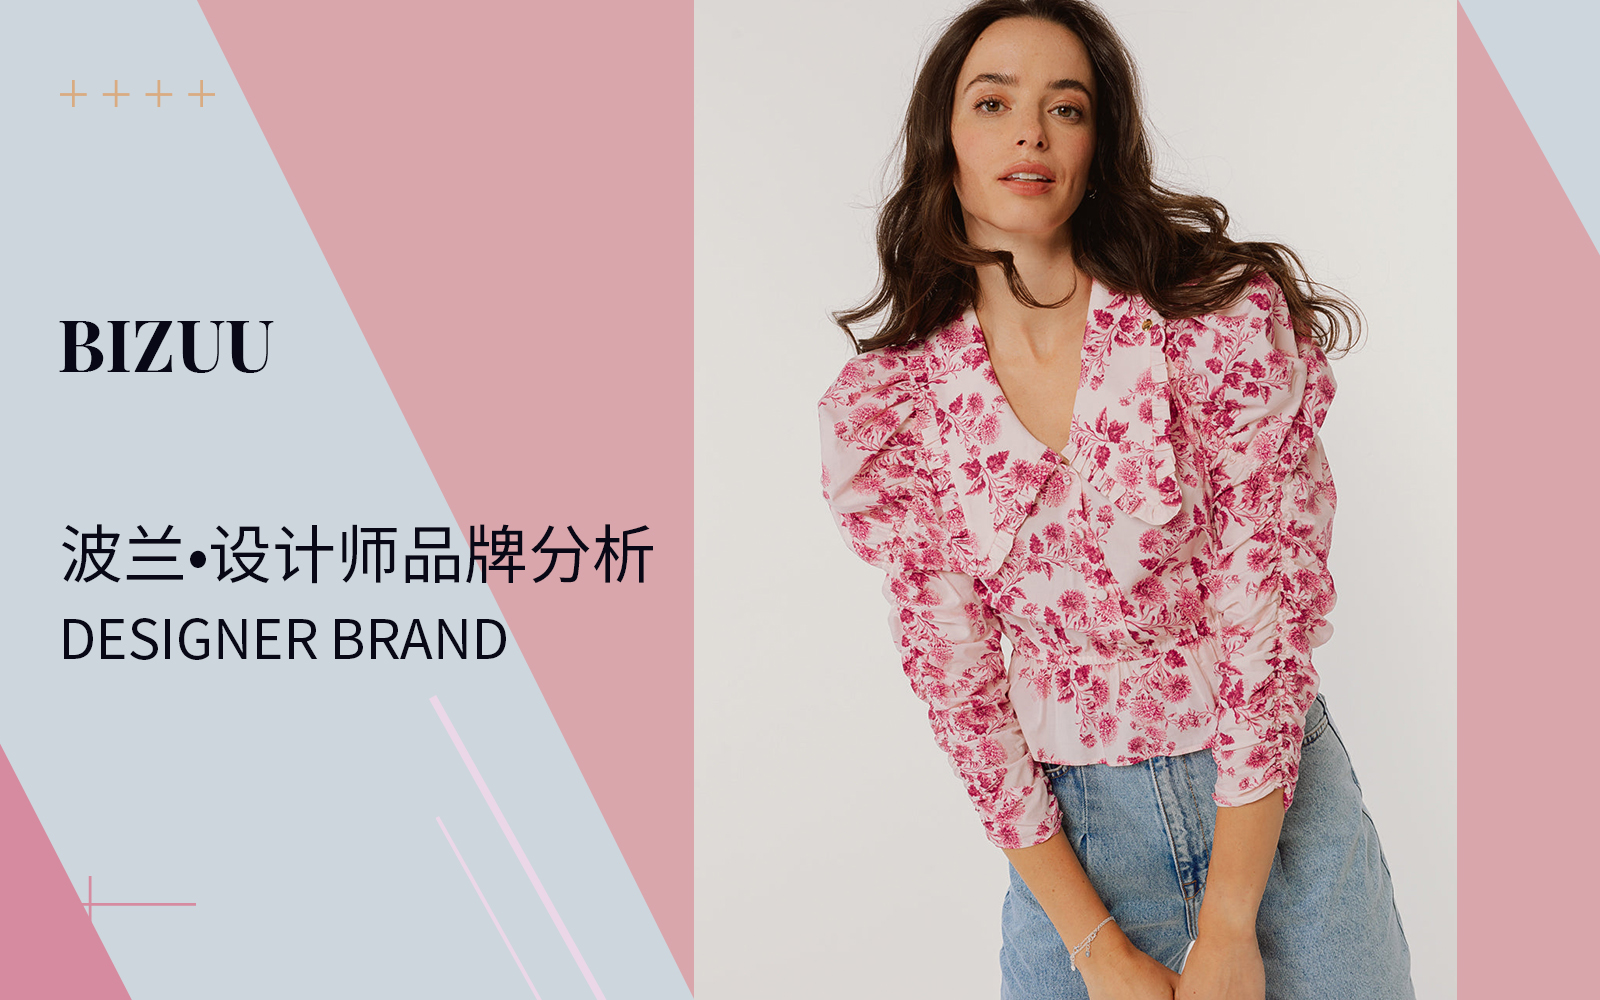 Elegant Mature Lady -- The Analysis of Bizuu The Womenswear Designer Brand